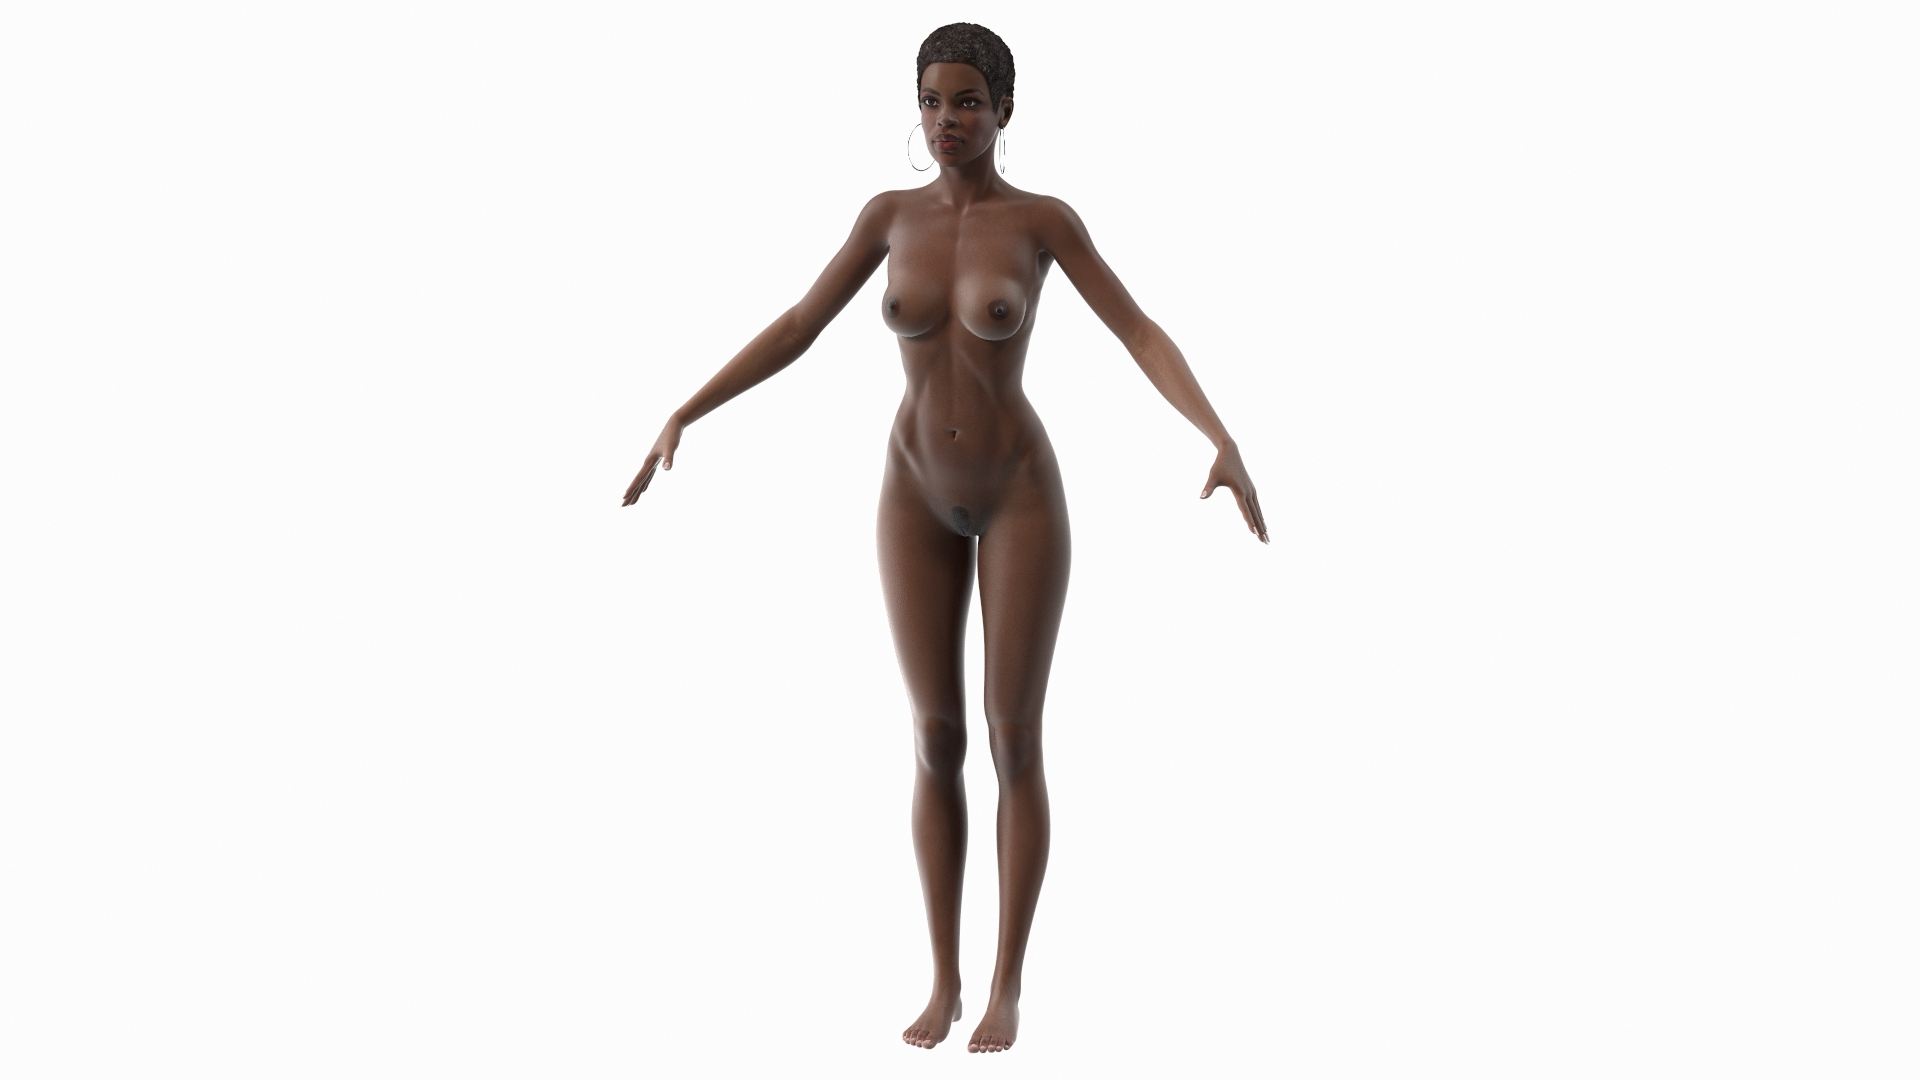 chantal whittaker add dark skin nude woman photo